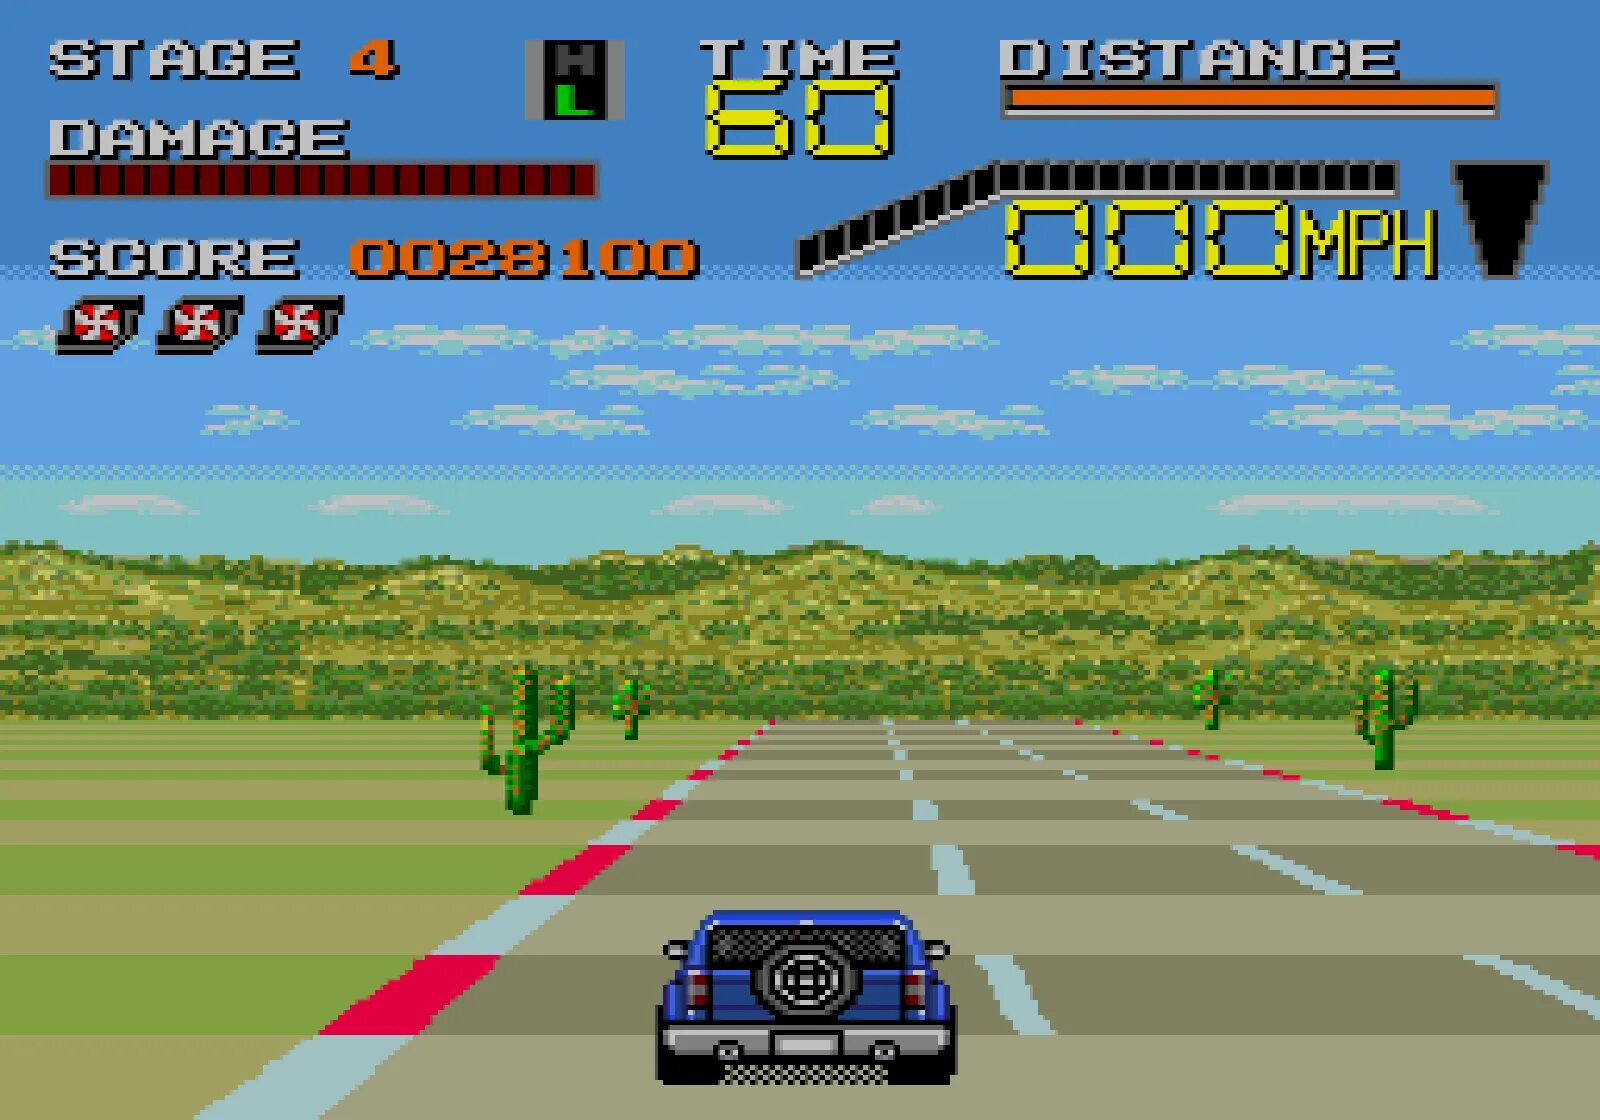 Игры сега на флешке. Chase hq 2 Sega. Игра Sega: Chase h.q. Sega Mega Drive гонки. Chase h.q. 2 Sega.